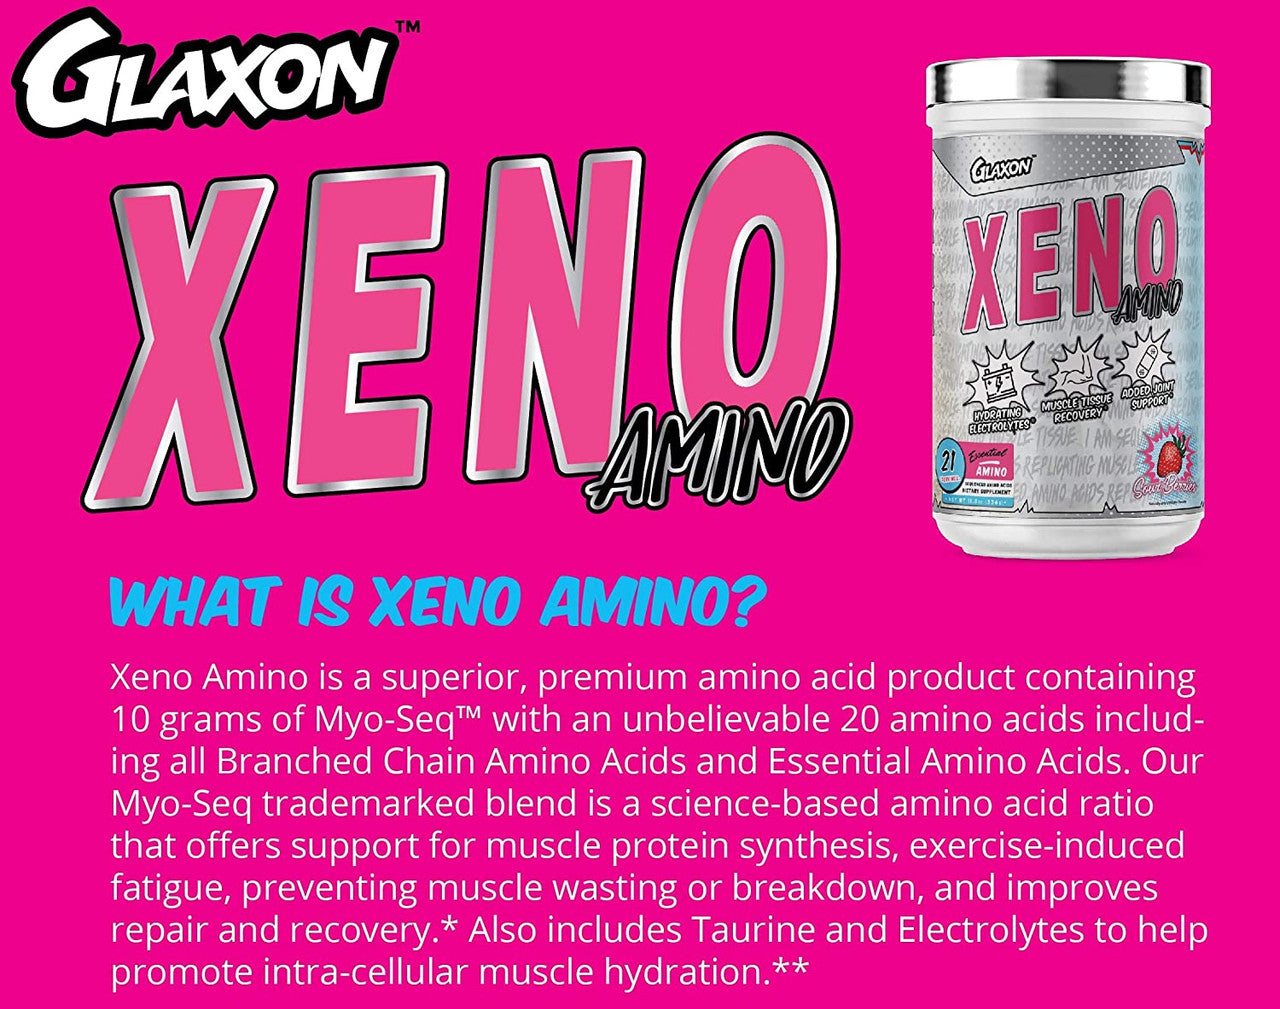 Glaxon Xeno what is xeno amino